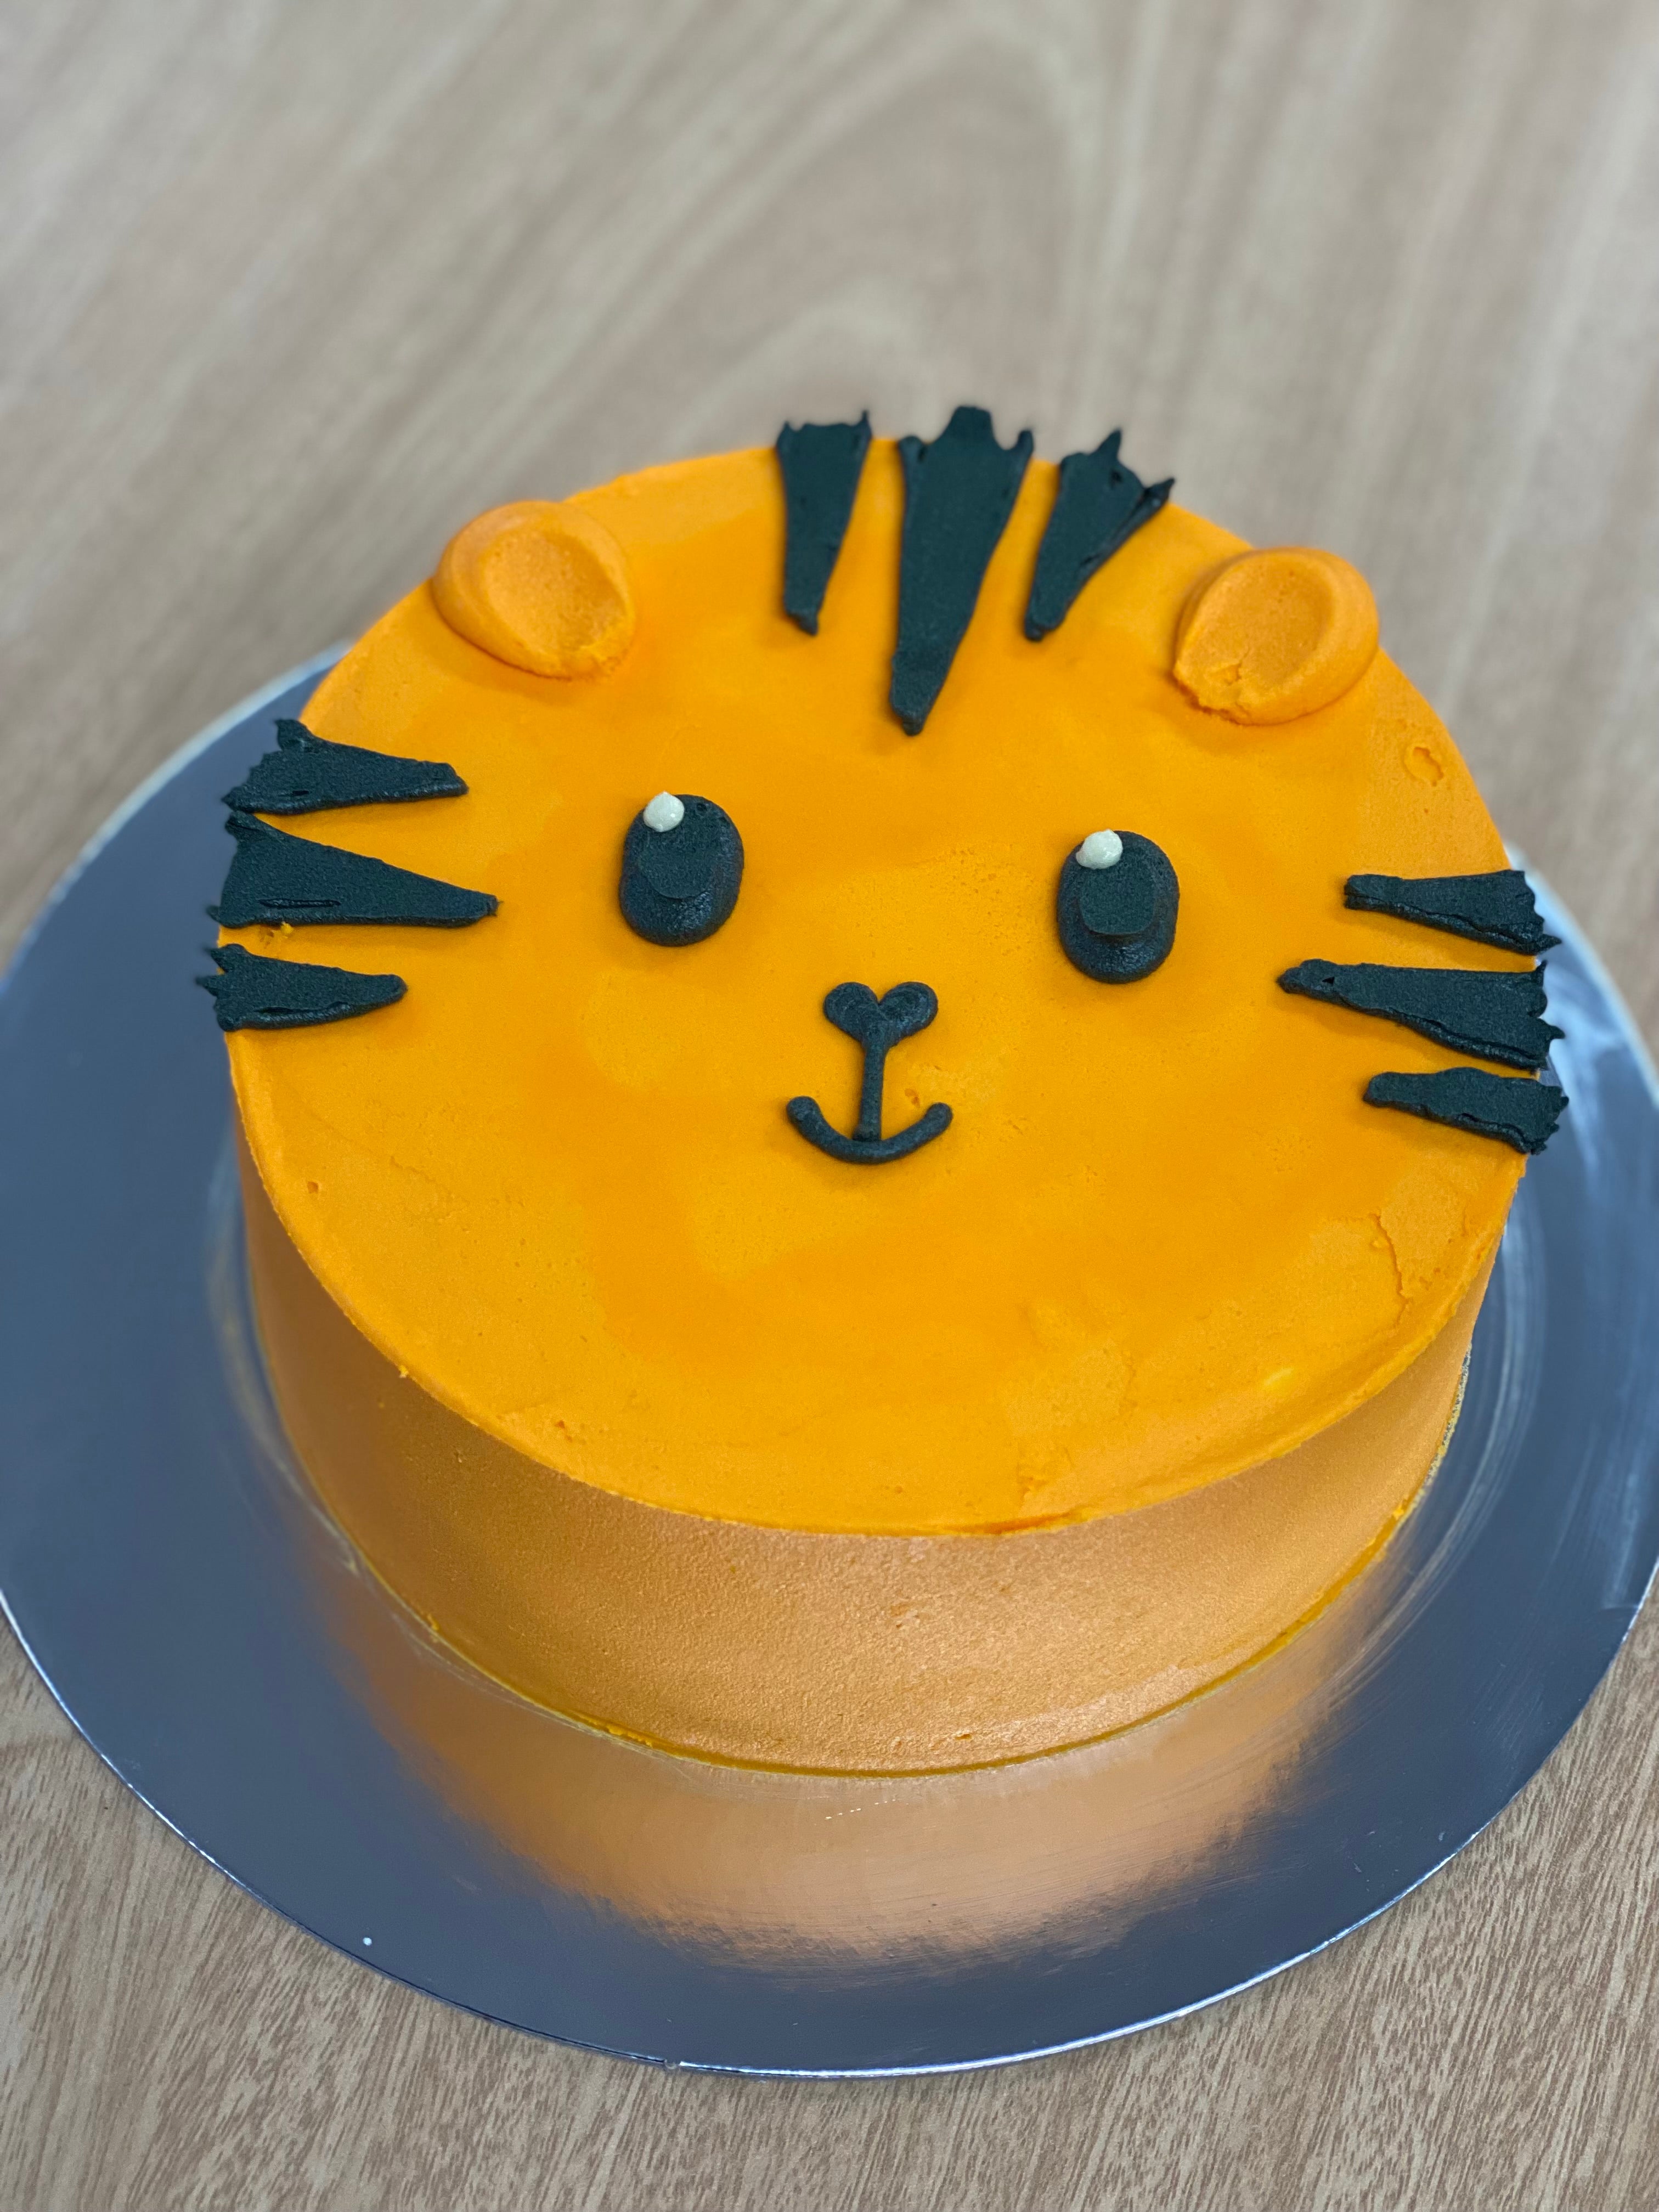 50 Tiger Cake Design (Cake Idea) - October 2019 | Animal birthday cakes, Tiger  cake, Cheetah birthday cakes